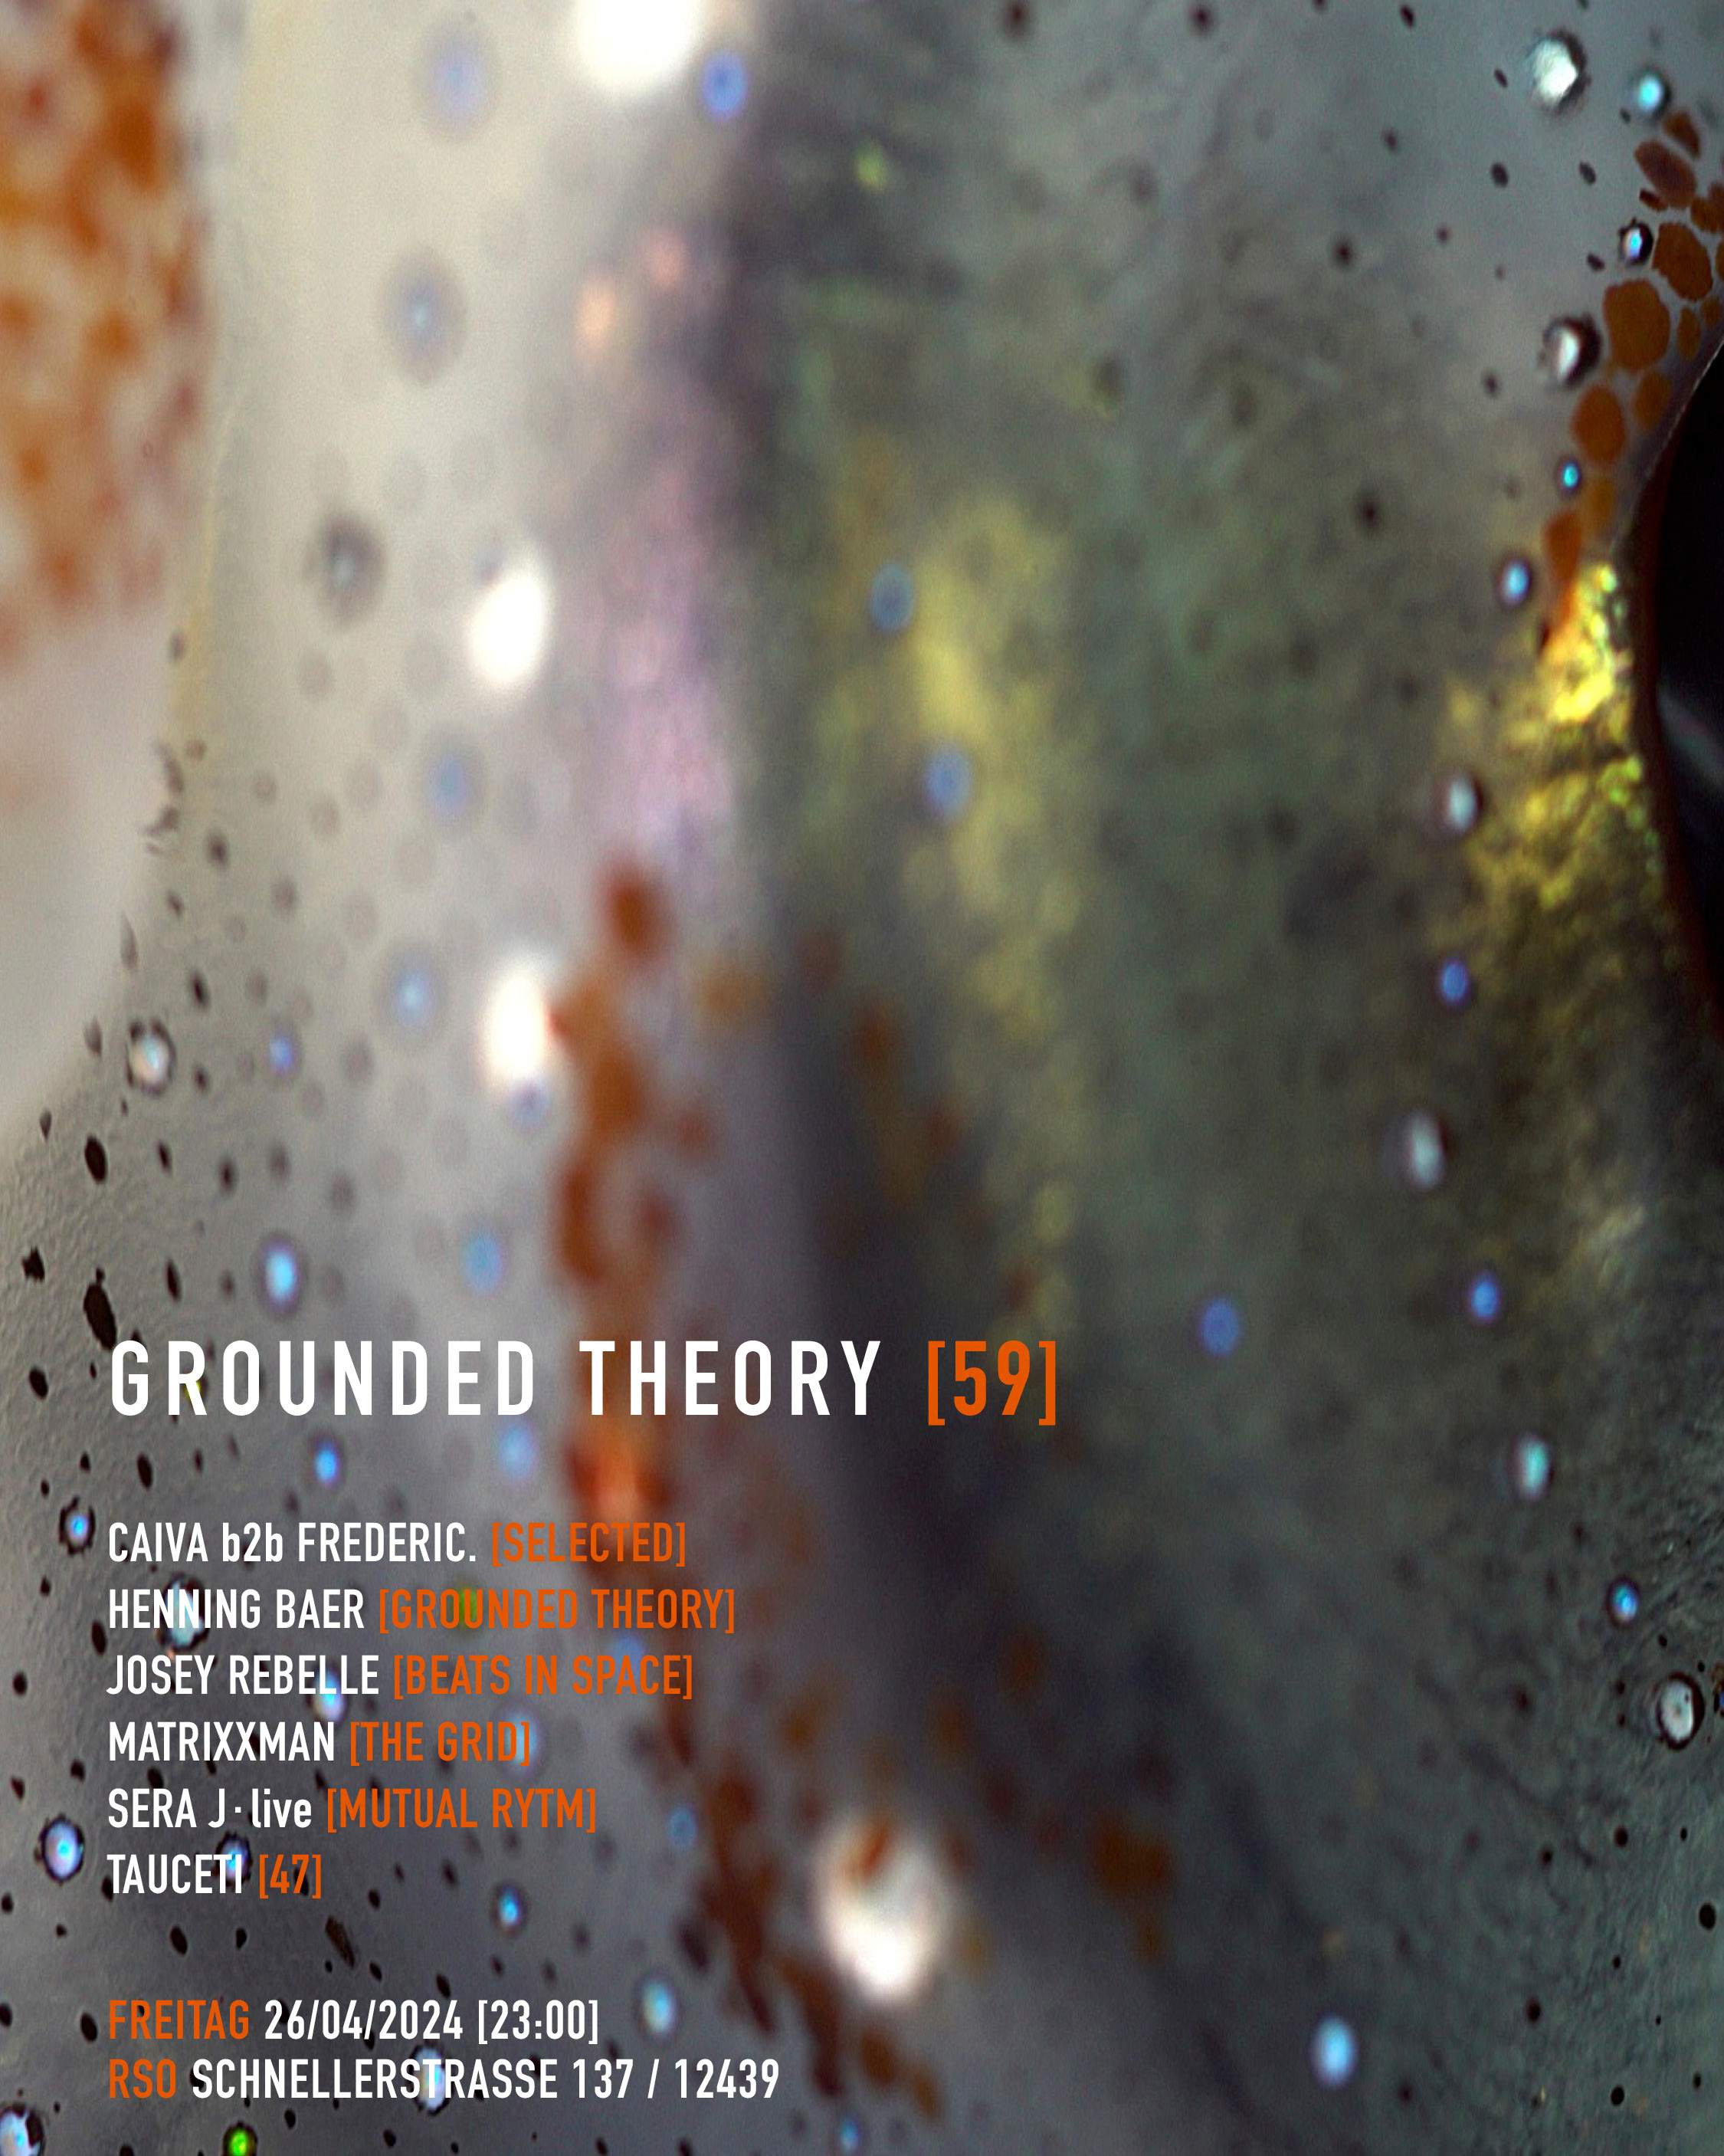 Grounded Theory w/ CAIVA b2b Frederic, Henning Baer, Josey Rebelle, Matrixxman, Sera J, Tauceti - フライヤー表